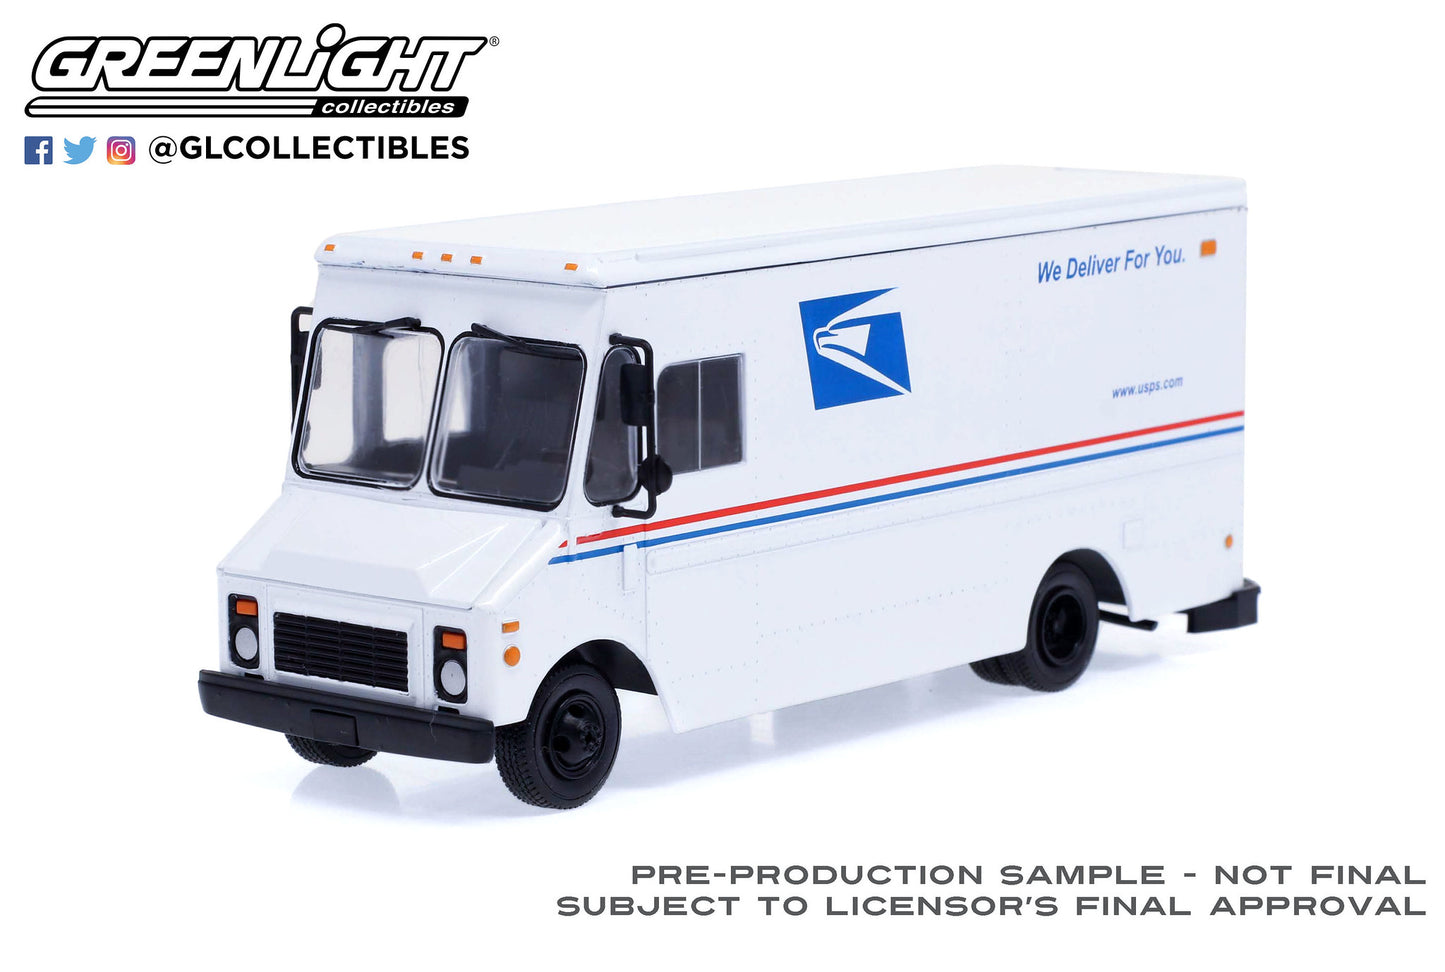 GreenLight 1:43 Grumman Olson - United States Postal Service (USPS) Delivery Truck Custom 86194